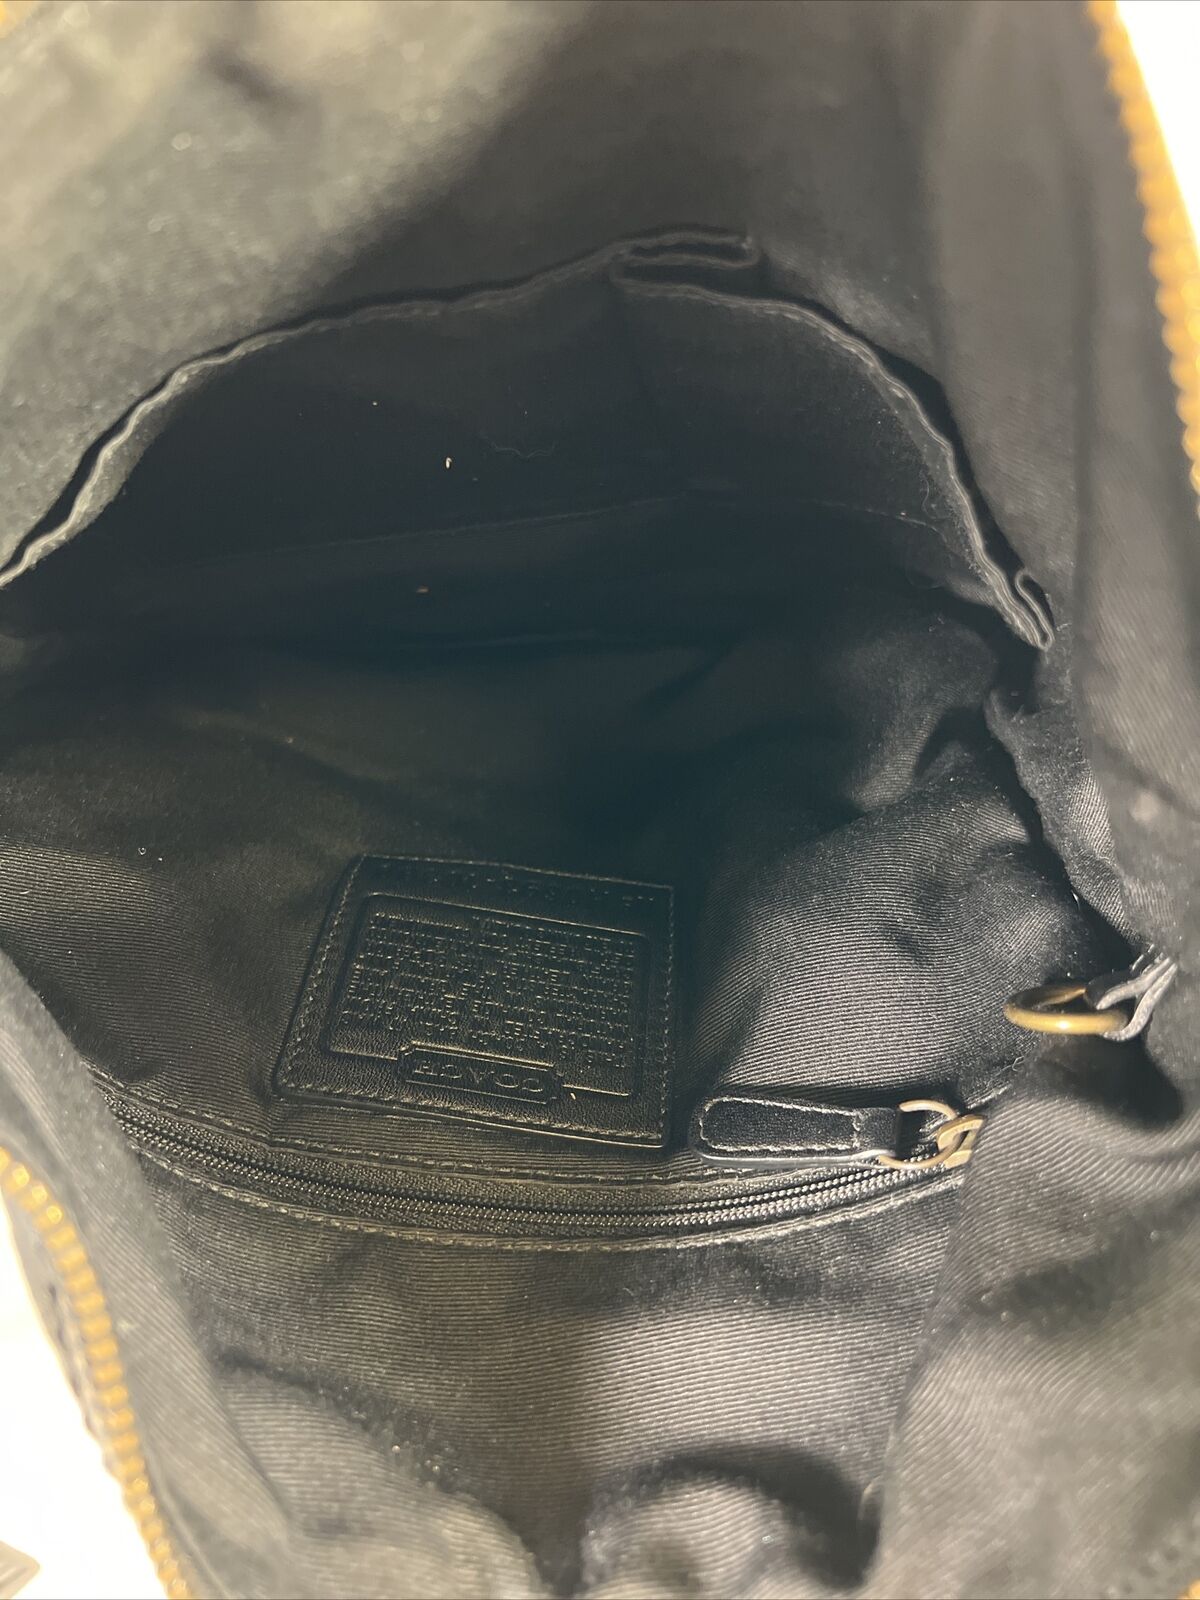 Coach Black Pebbled Leather Chelsea Laced Shoulder Bag Purse